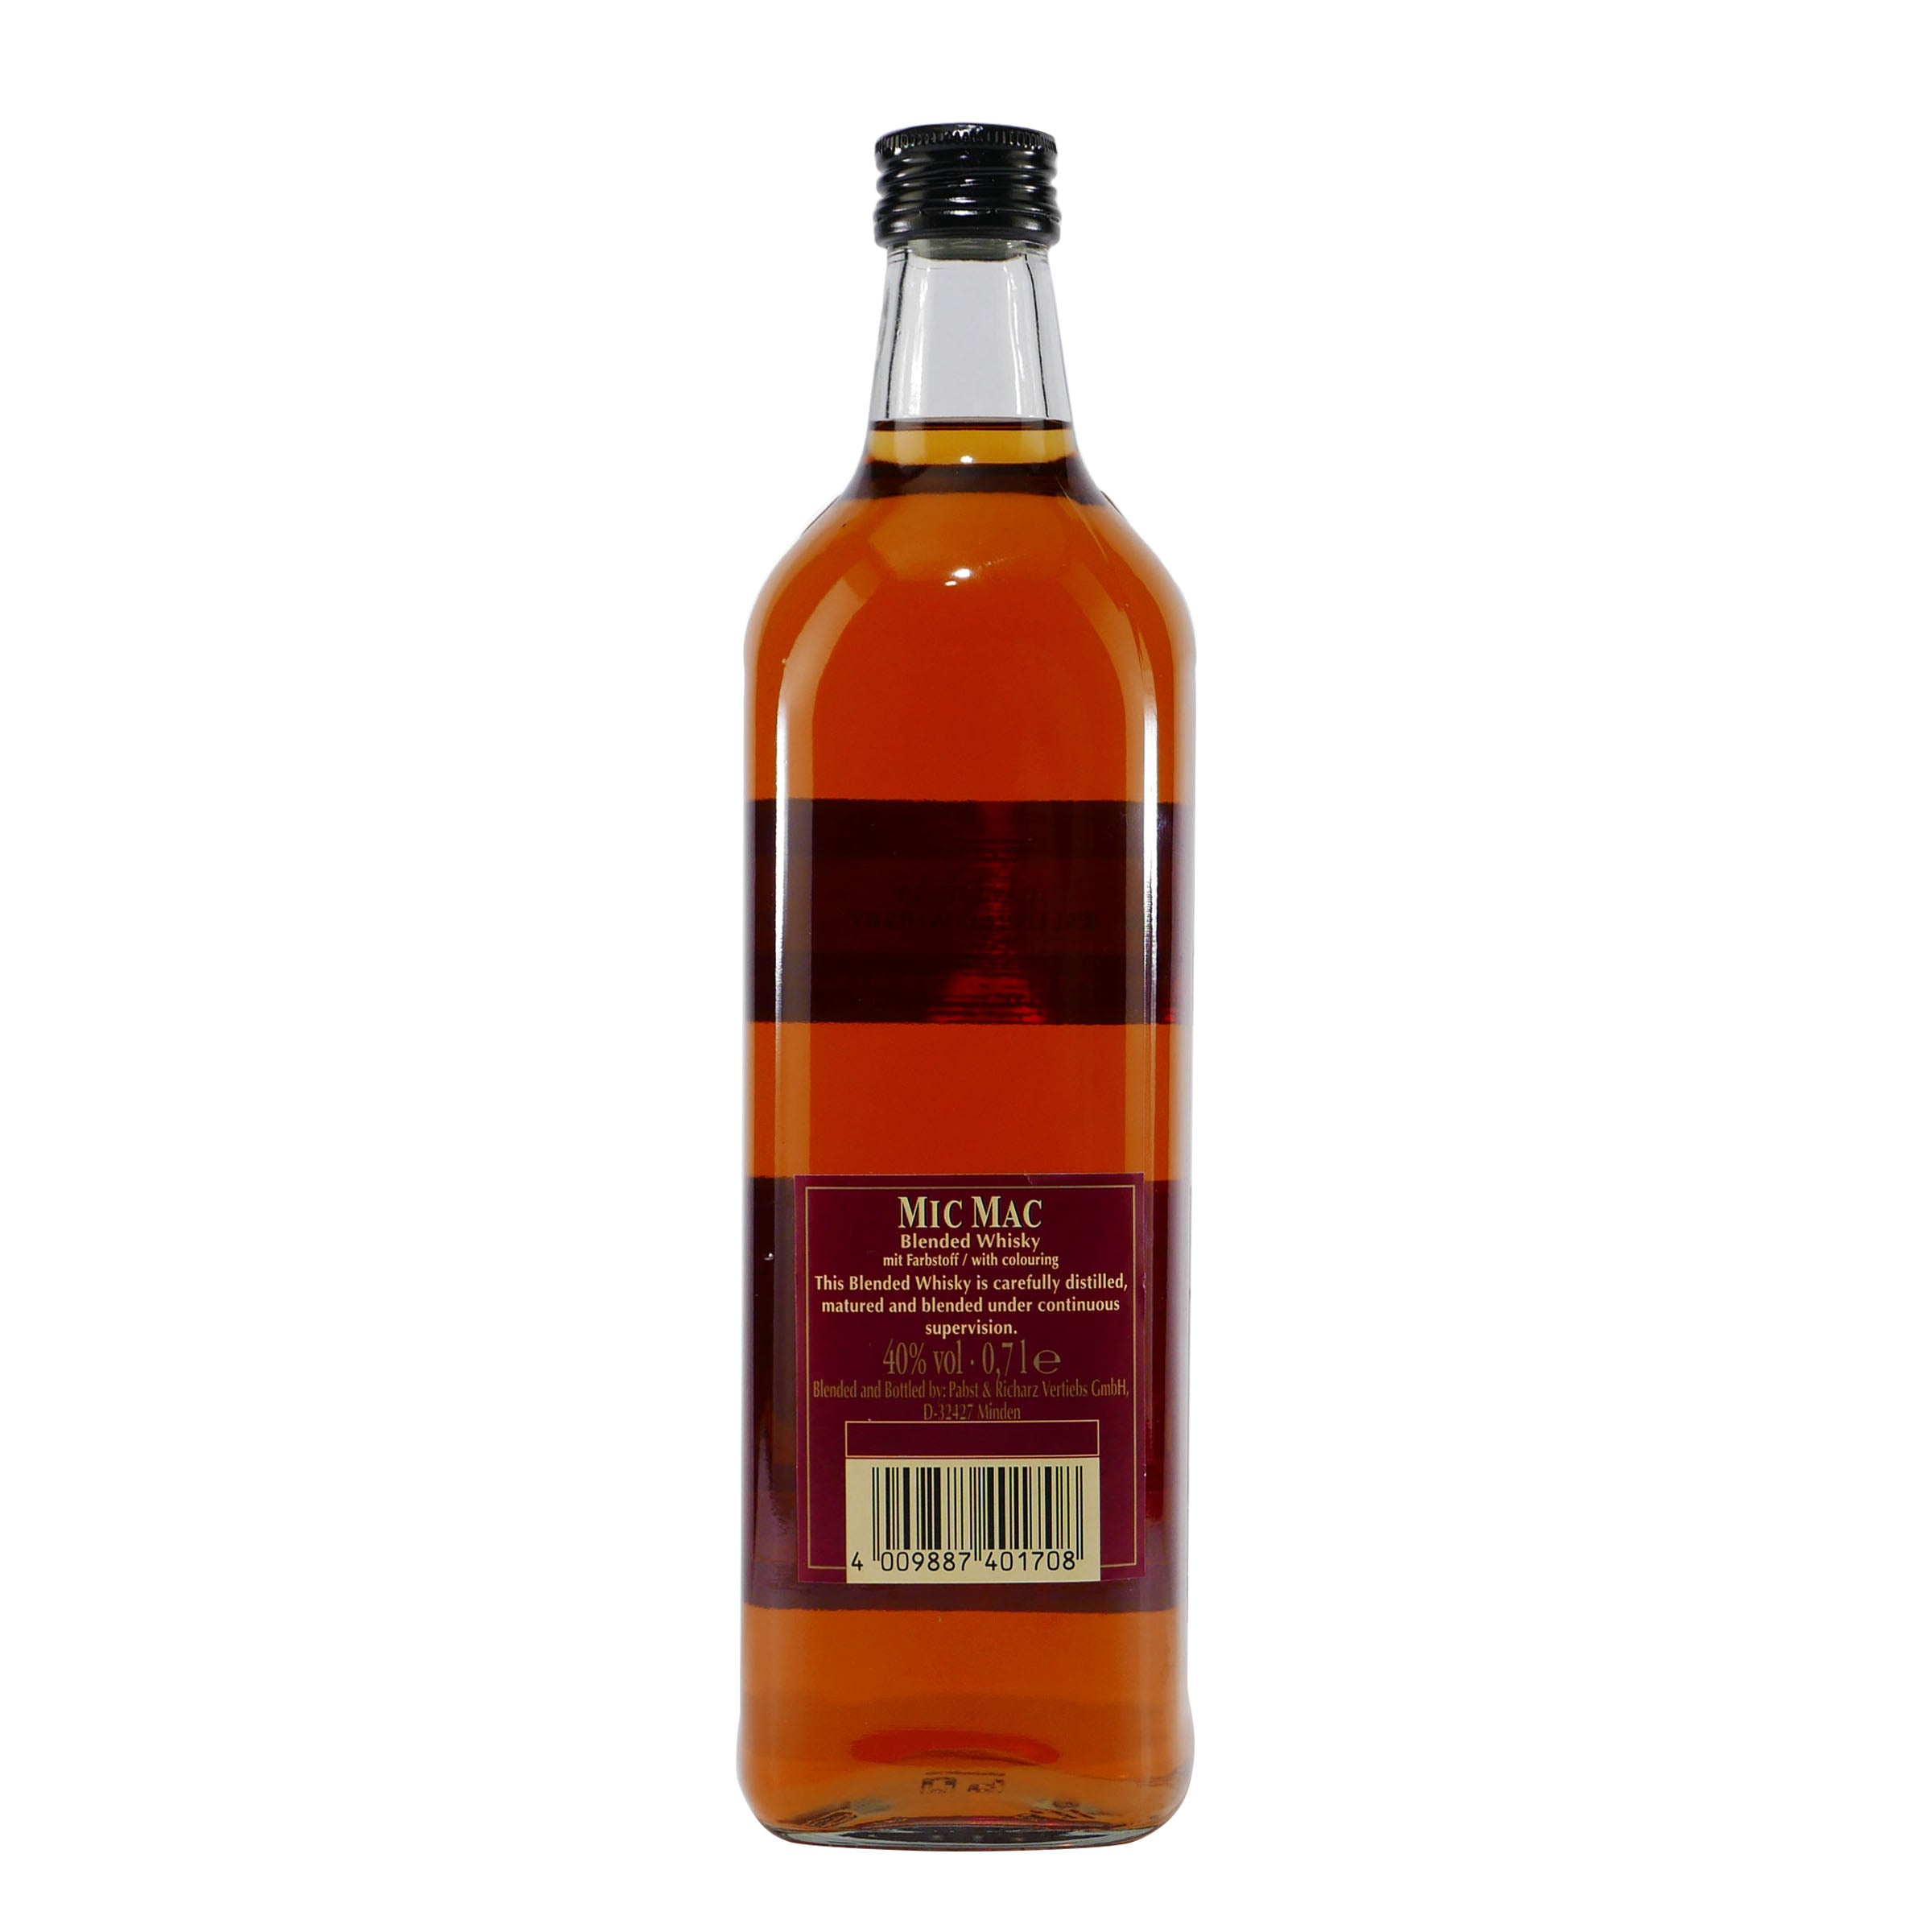 Mic Mac Blended Whisky (6 x 0,7L)